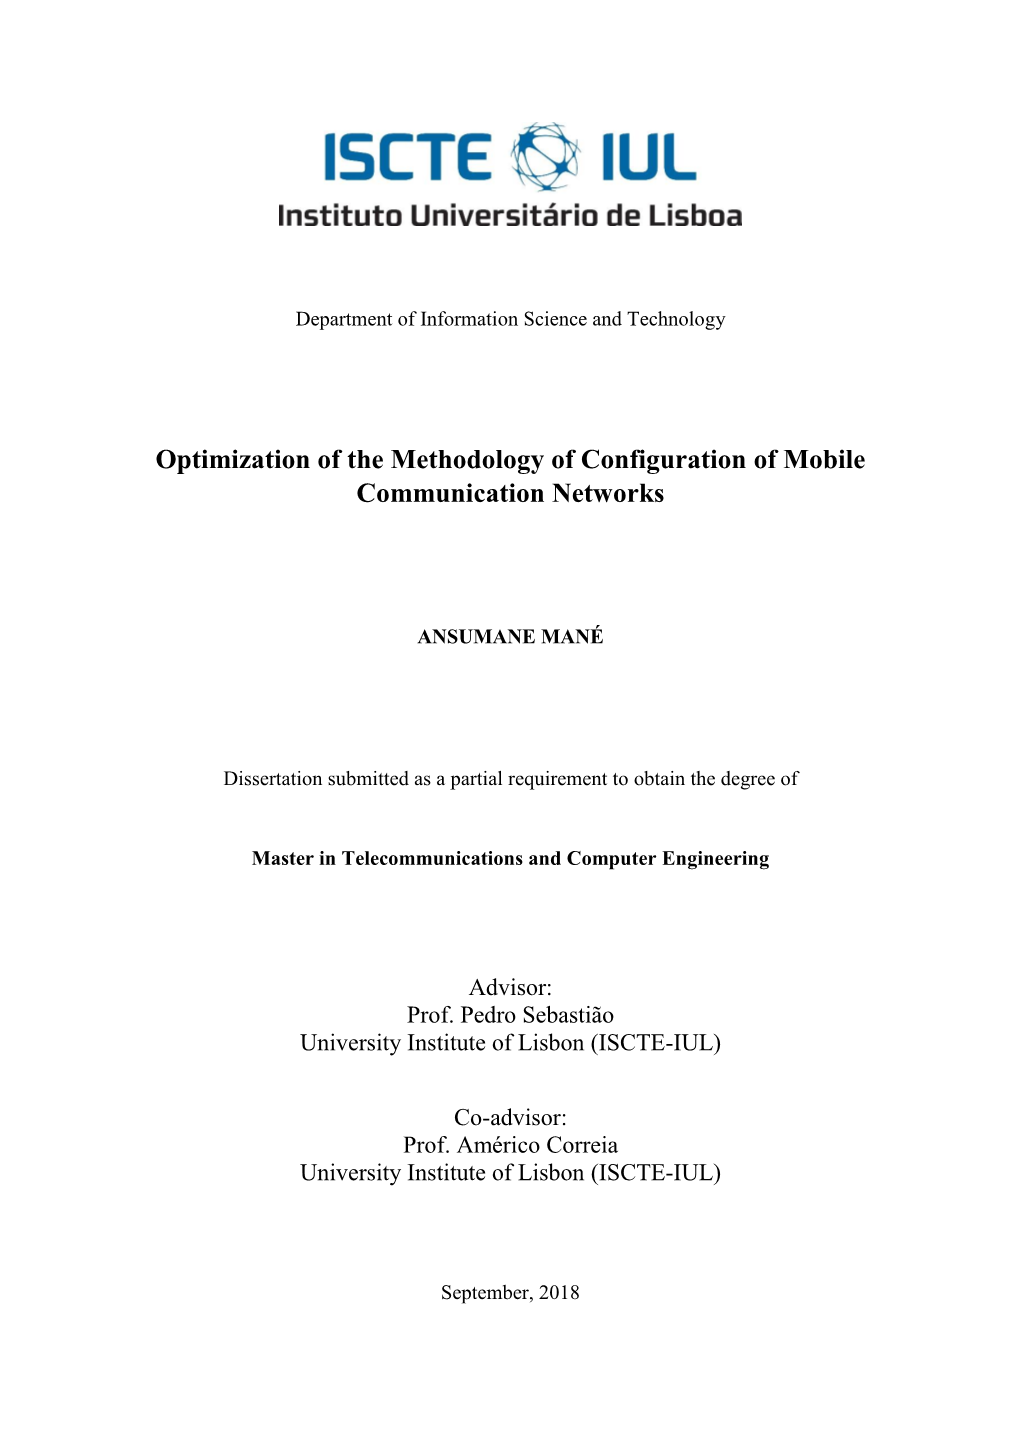 Optimization of the Methodology of Configuration of Mobile Communication Networks